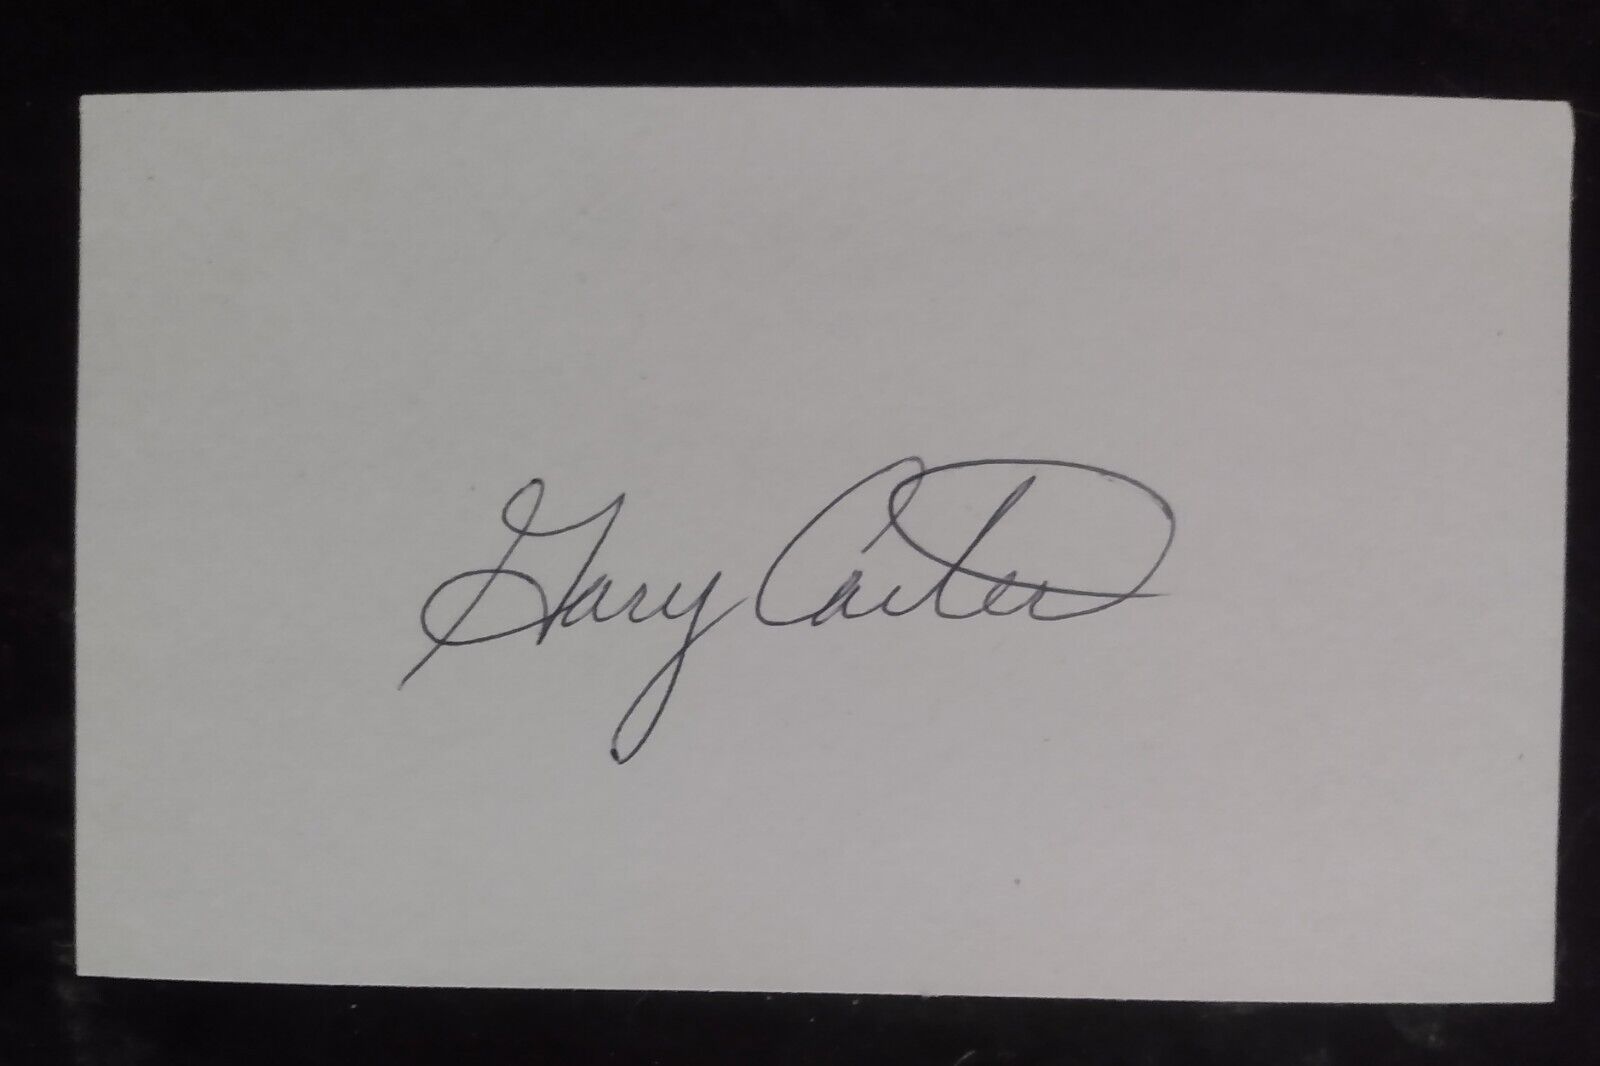 Gary Carter HOF Autographed 3x5 Index Card